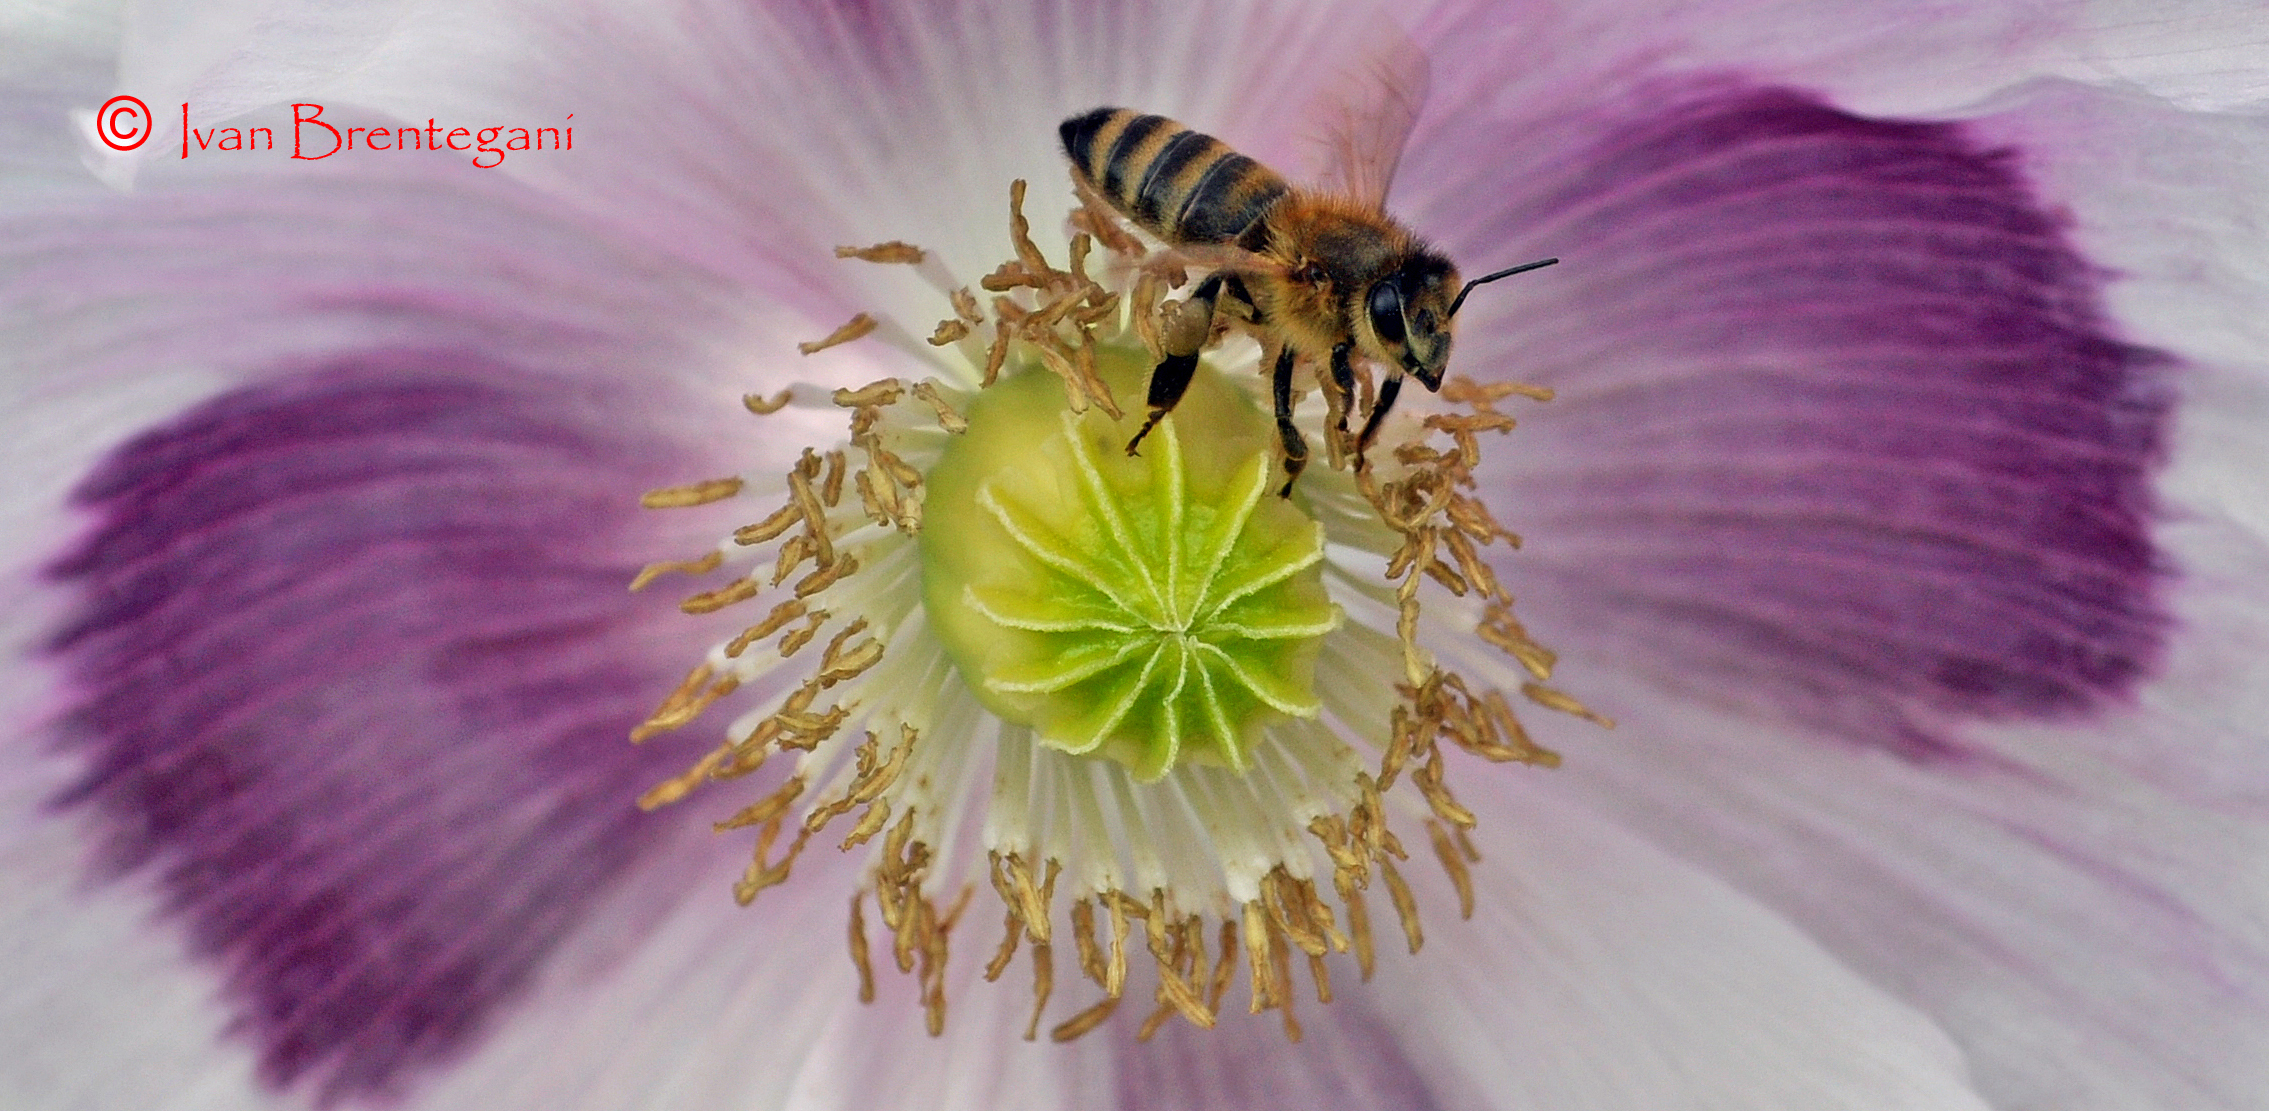 From flower to flower ...... The sweet bee flight...